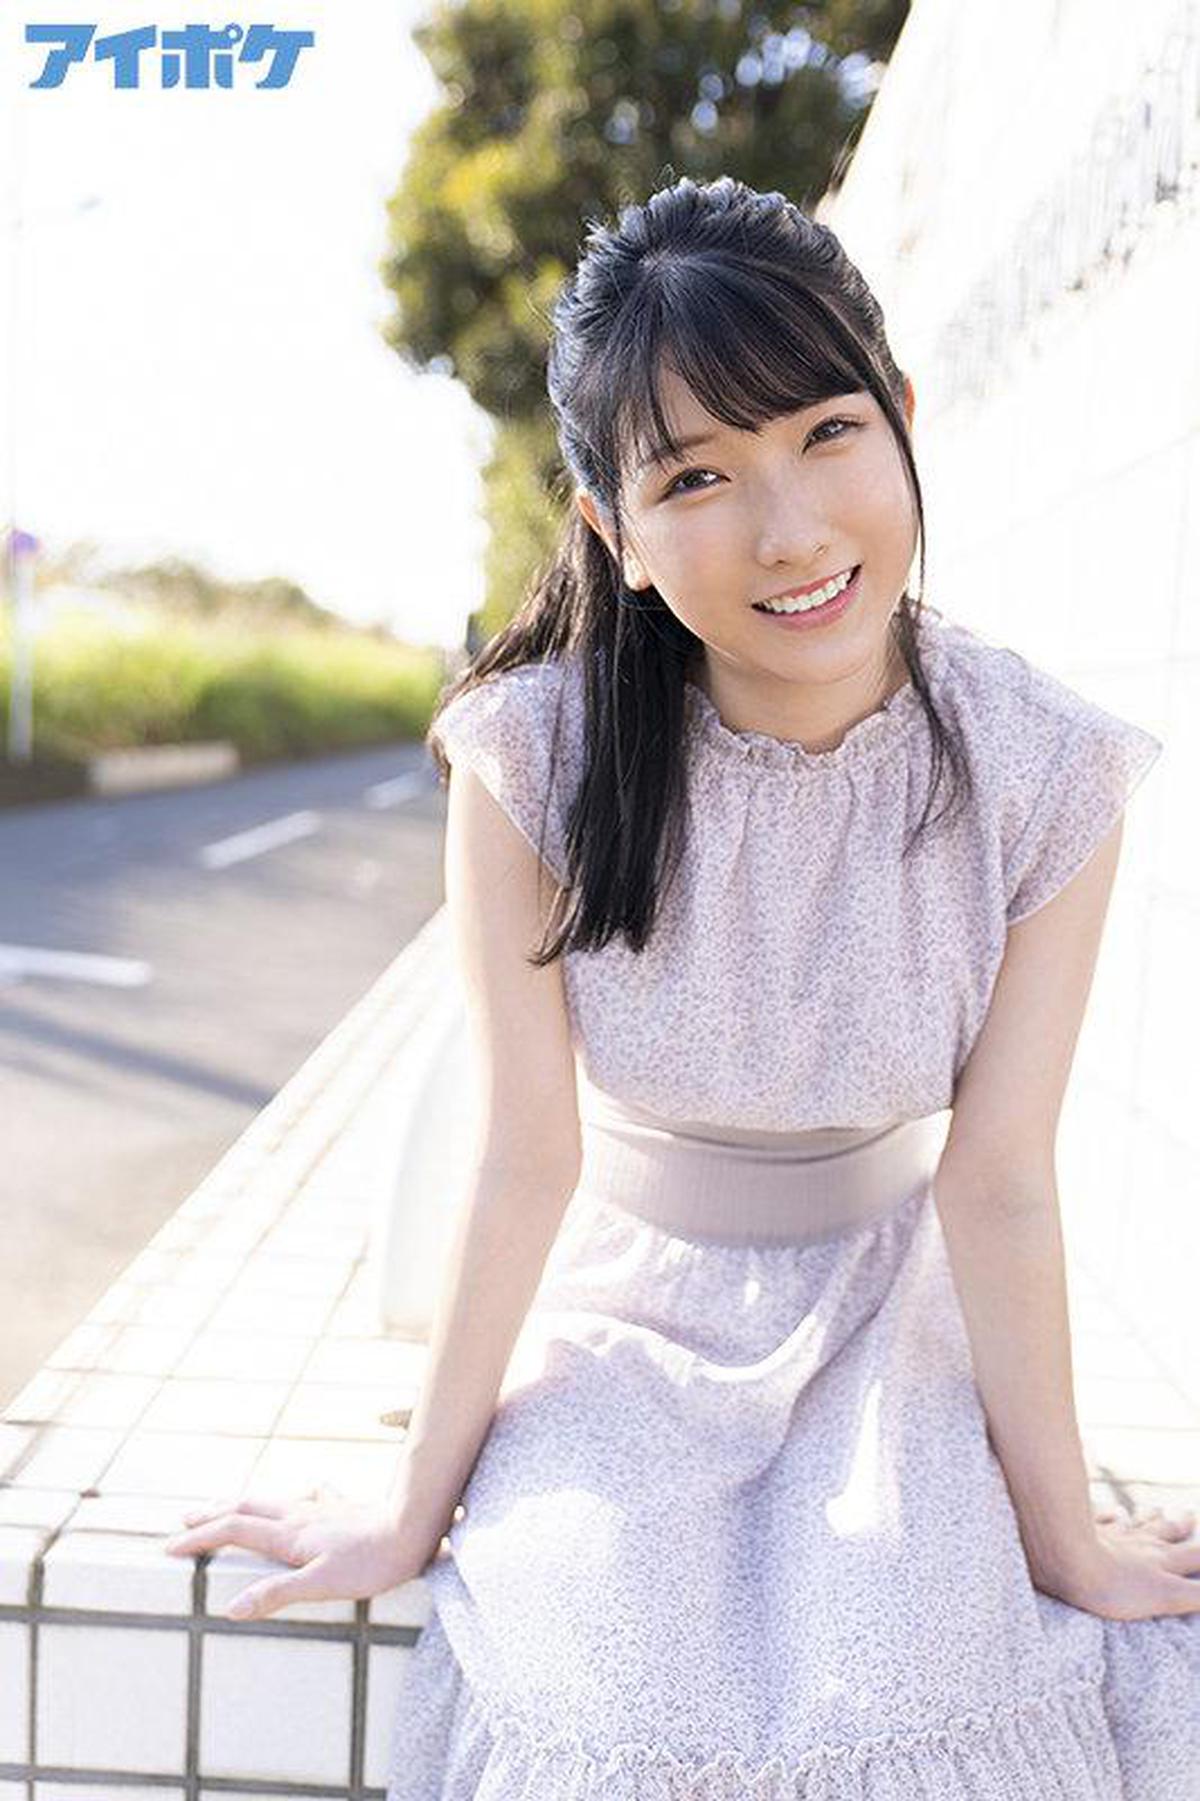 IPX-787 ความประทับใจครั้งแรก 152 น้องสาว busty ที่สวยงามพร้อมรอยยิ้มที่น่ารักที่สุด Hikaru Miyanishi